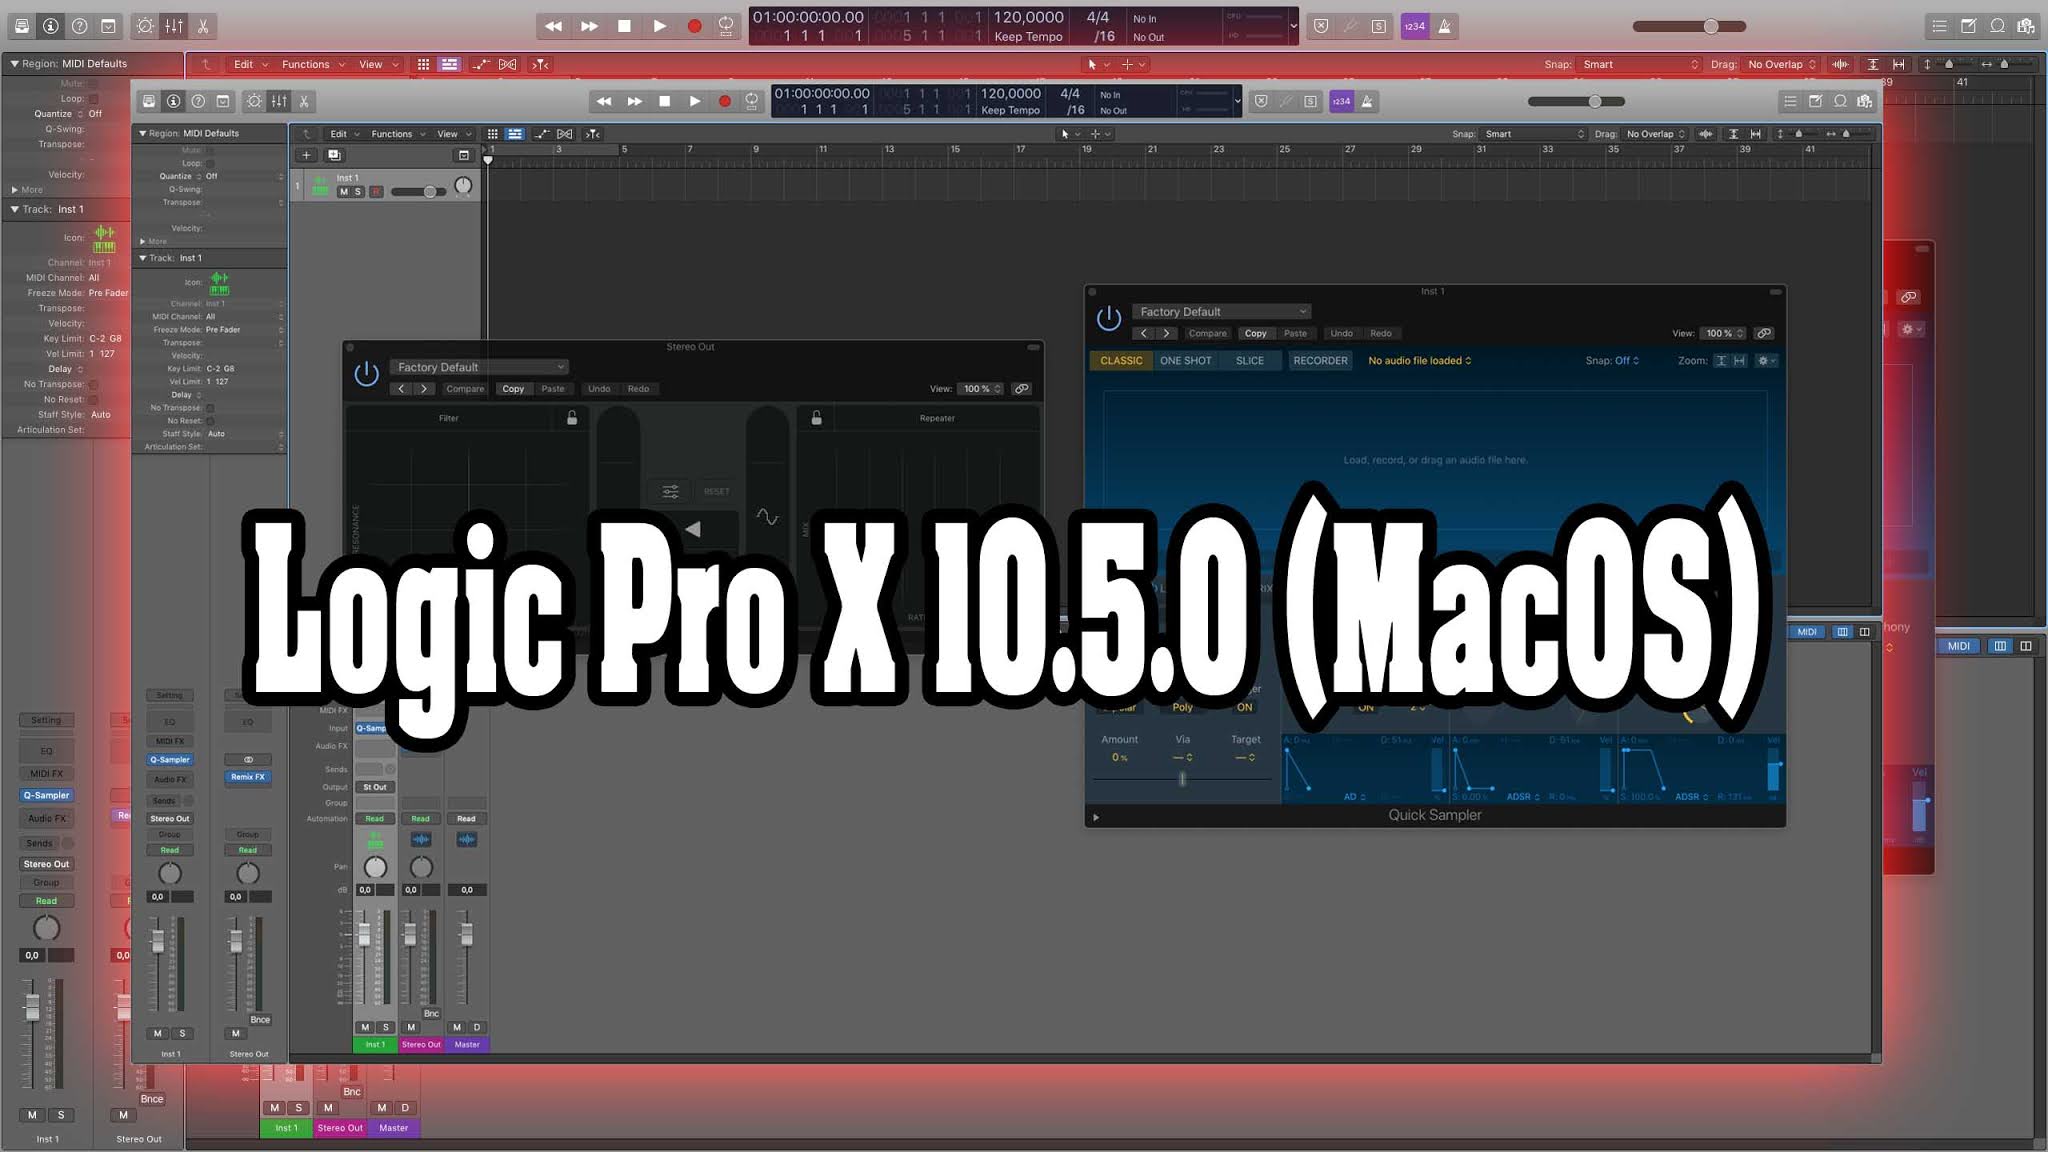 Logic Pro X 10.5.0